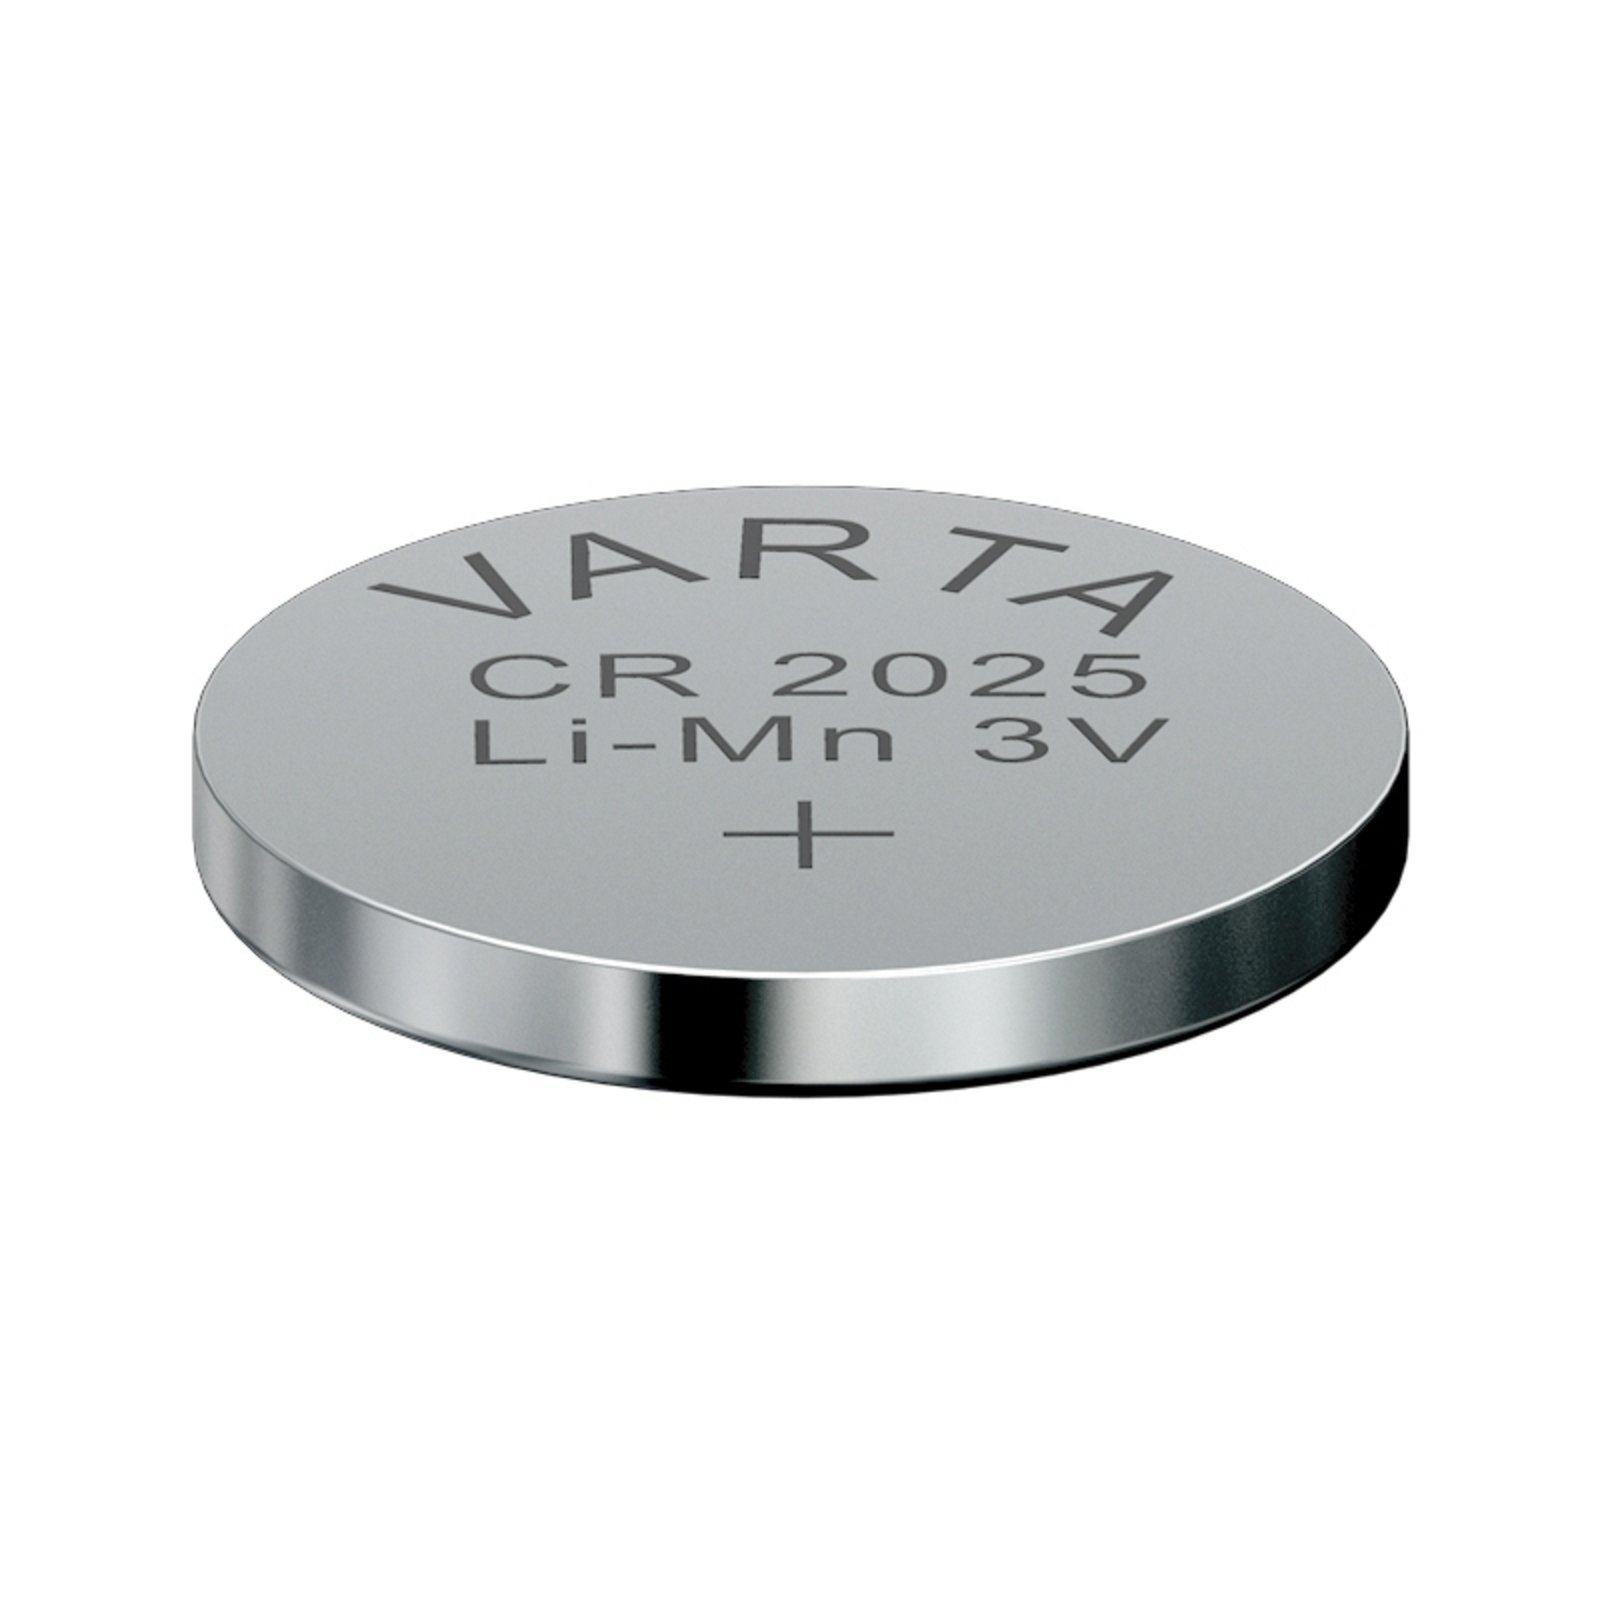 CR2025 3 V 165 mAh lithium button cell